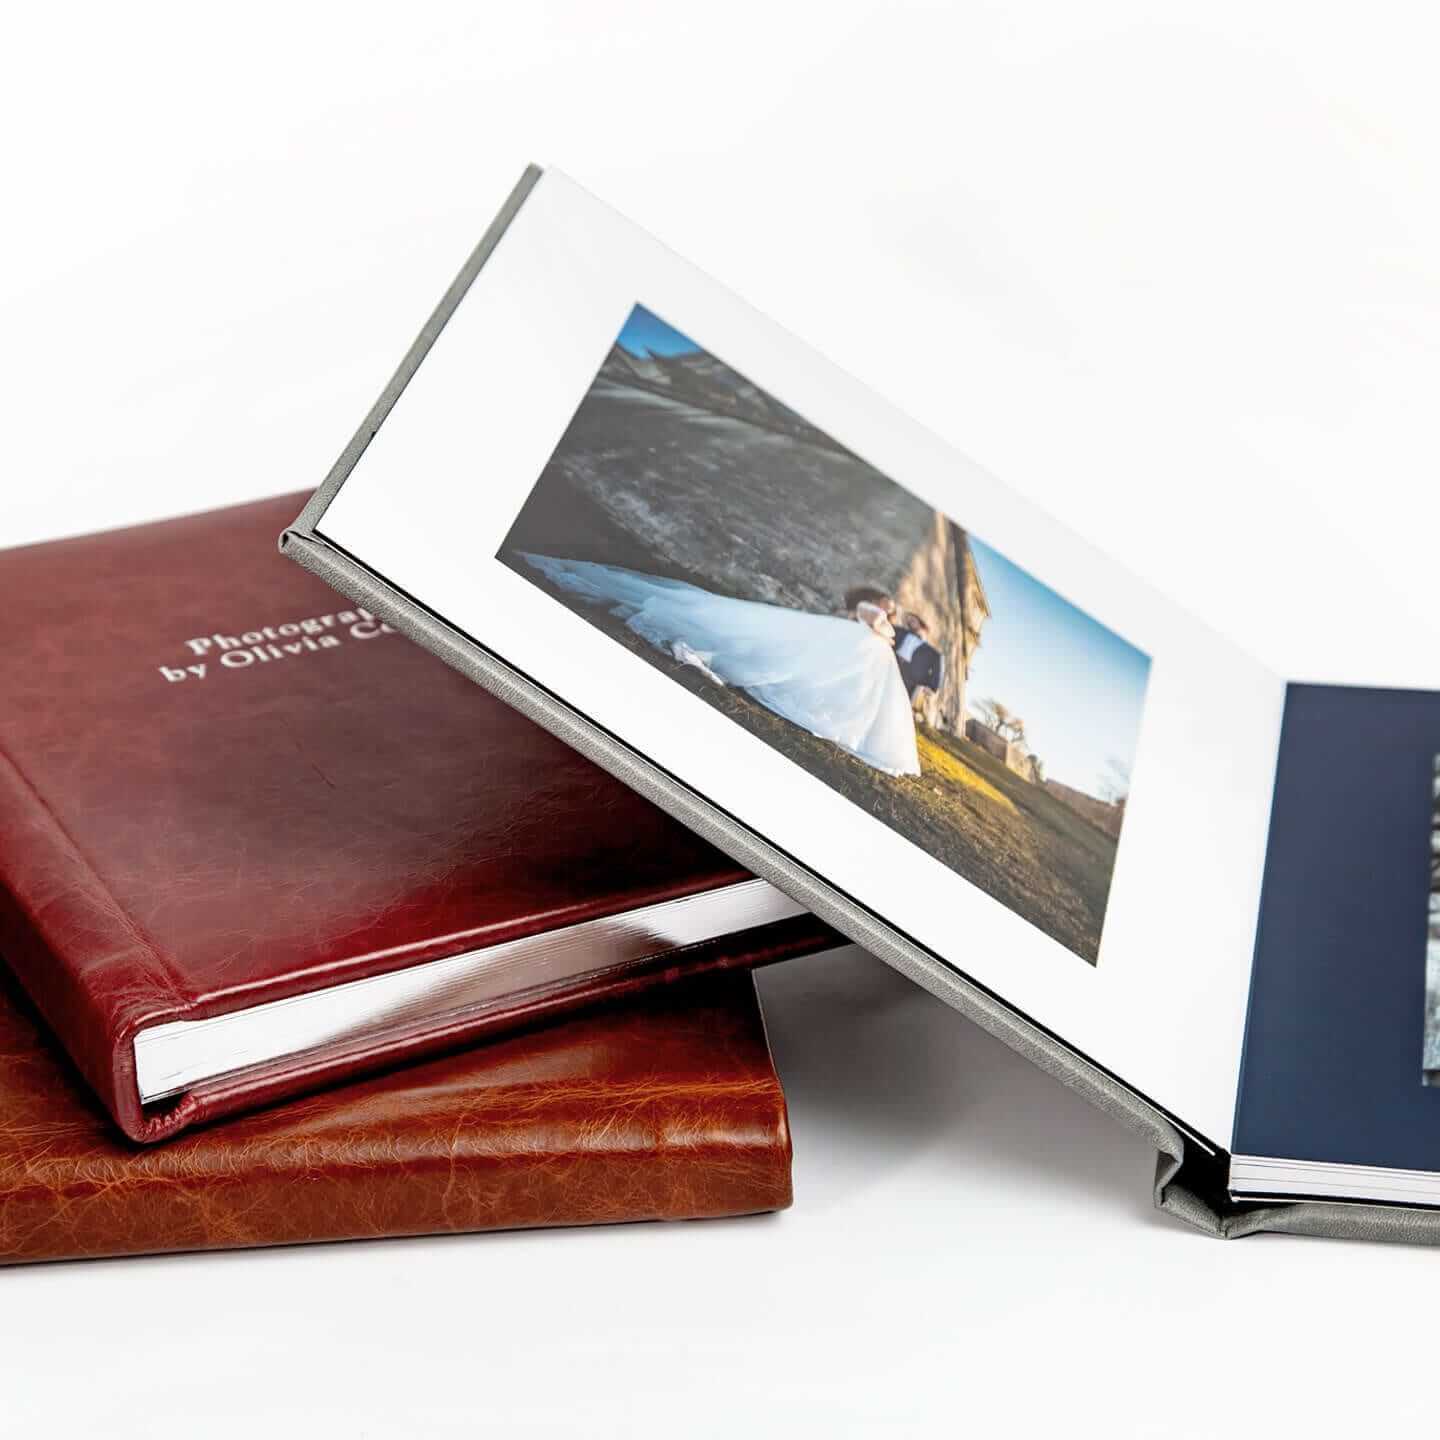 RECUTMS Picture Album Book for 600 4x6 Photos Button Grain Leather